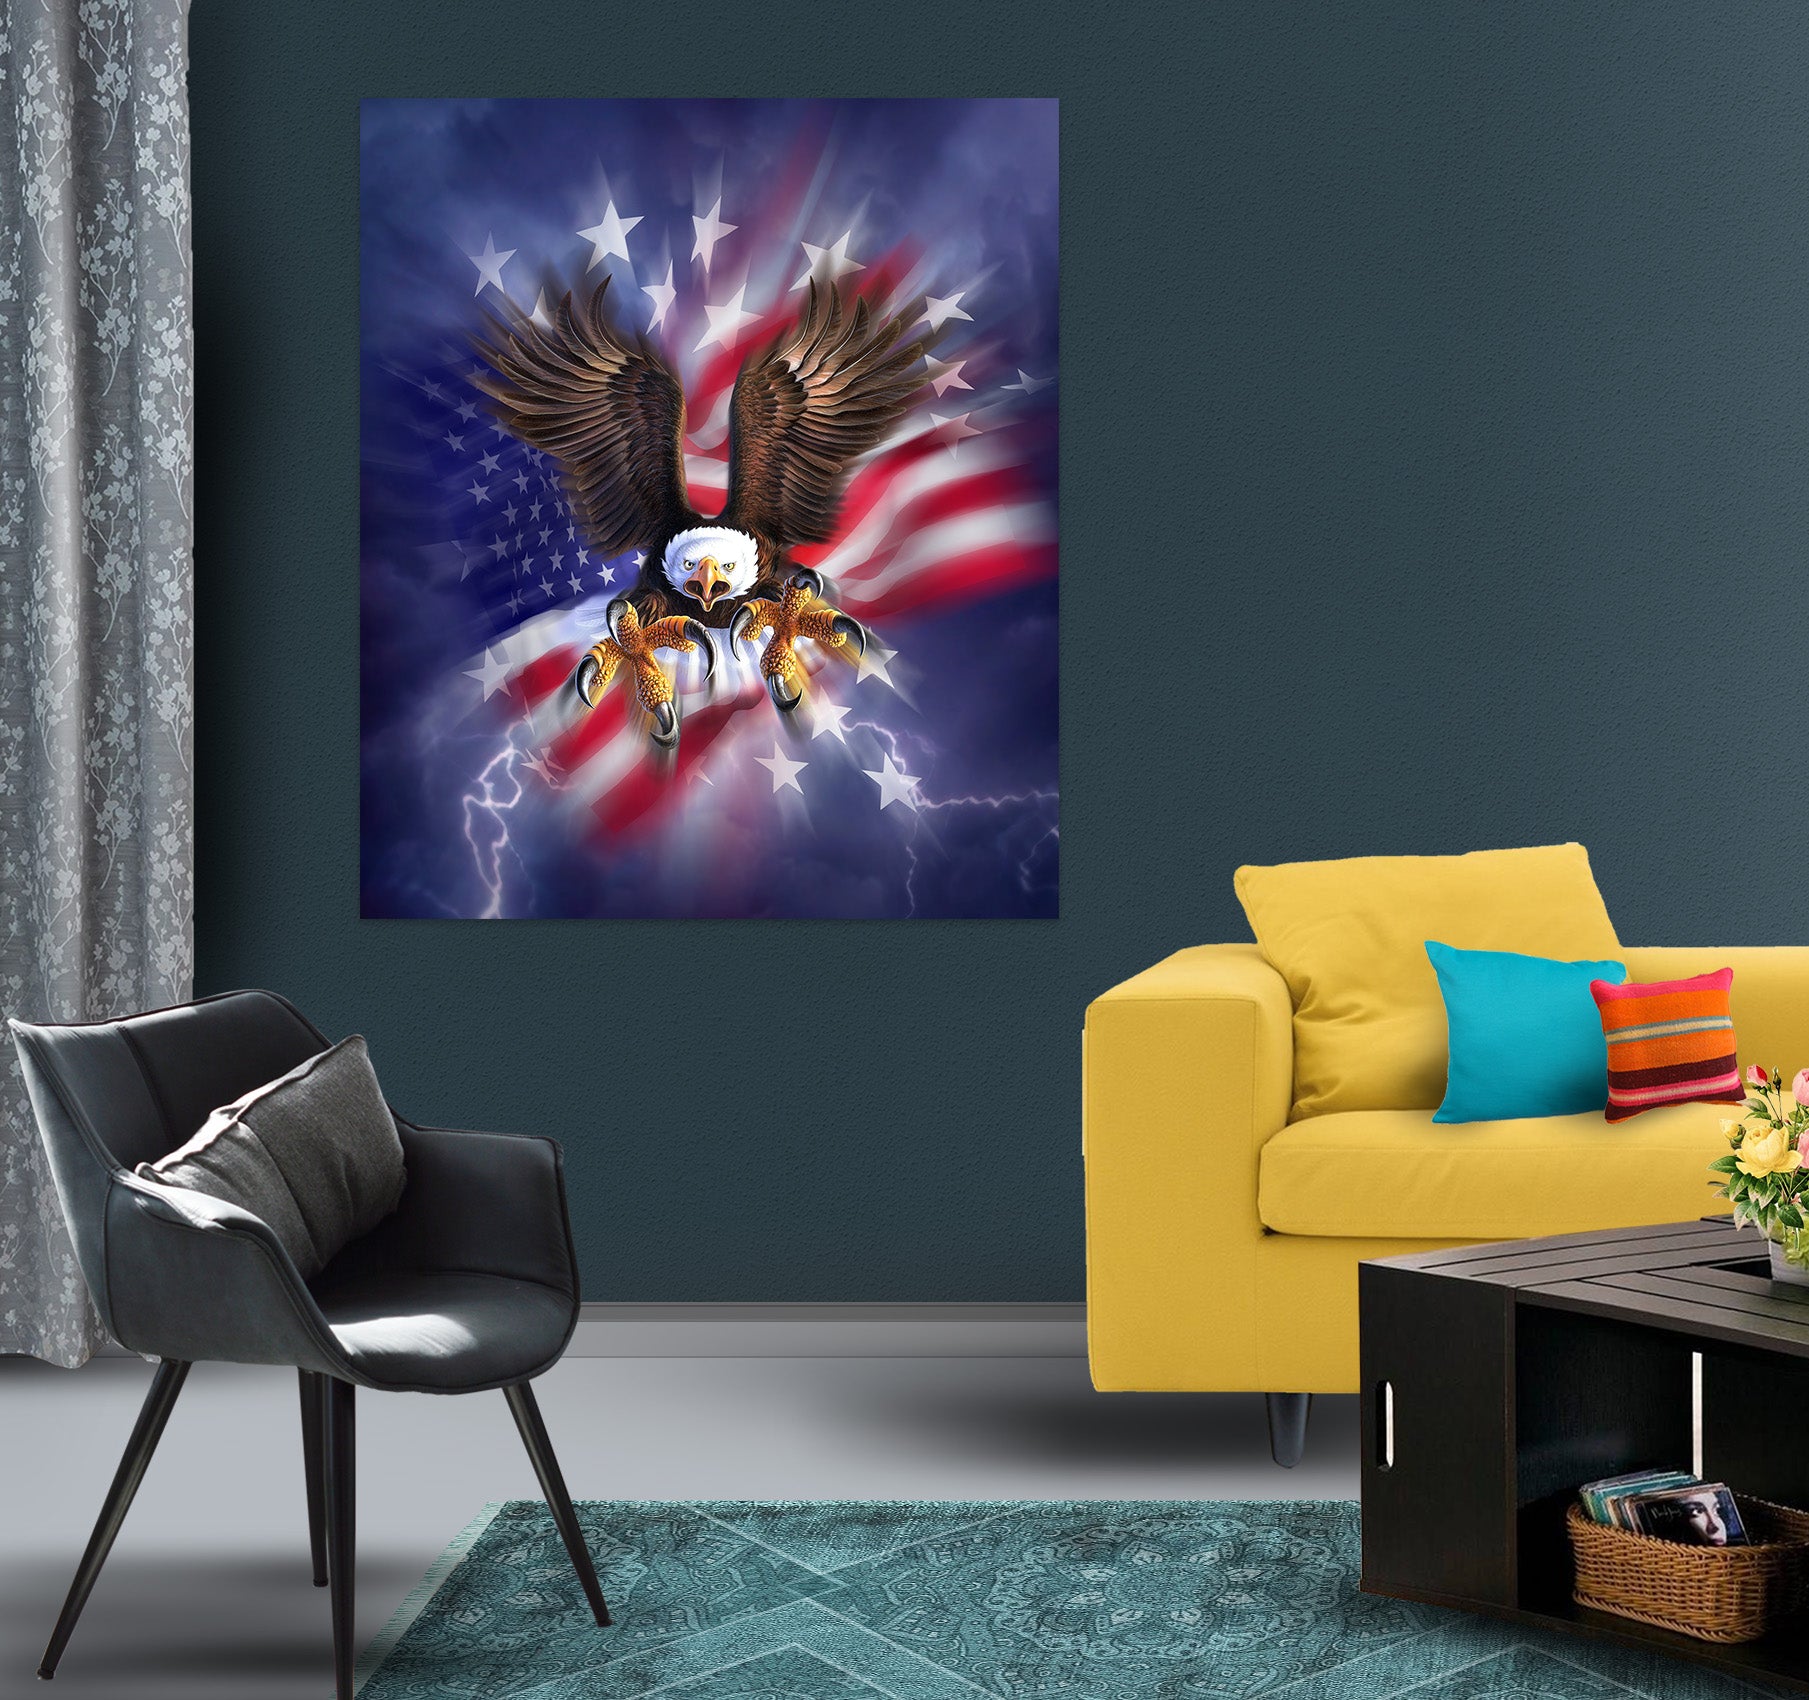 3D Patriotic Eagle 85188 Jerry LoFaro Wall Sticker